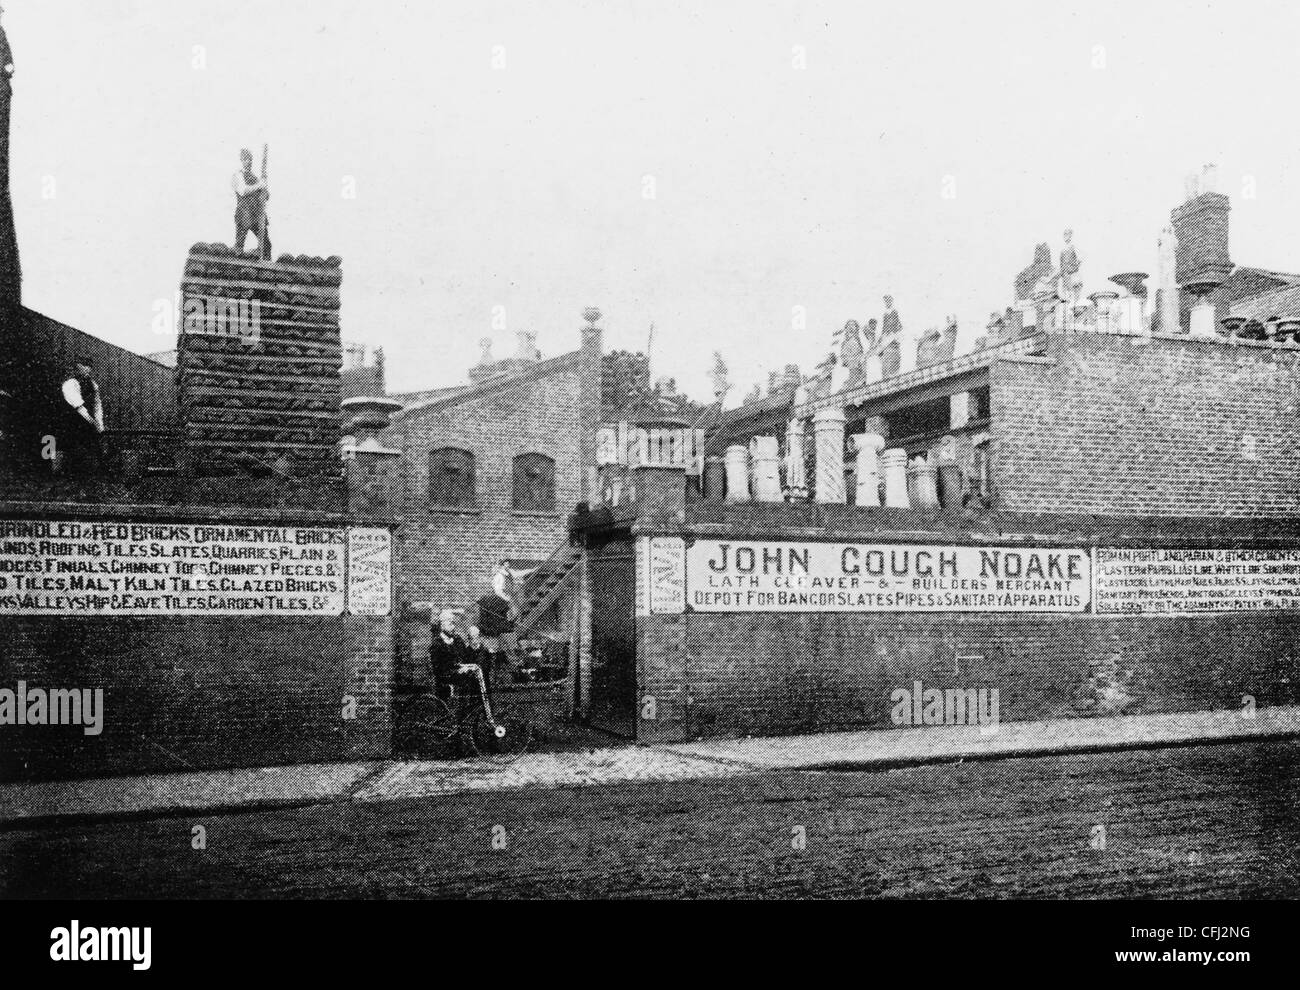 Fabrik arbeiten, John Gough Noake, Wolverhampton, c 1890. Stockfoto